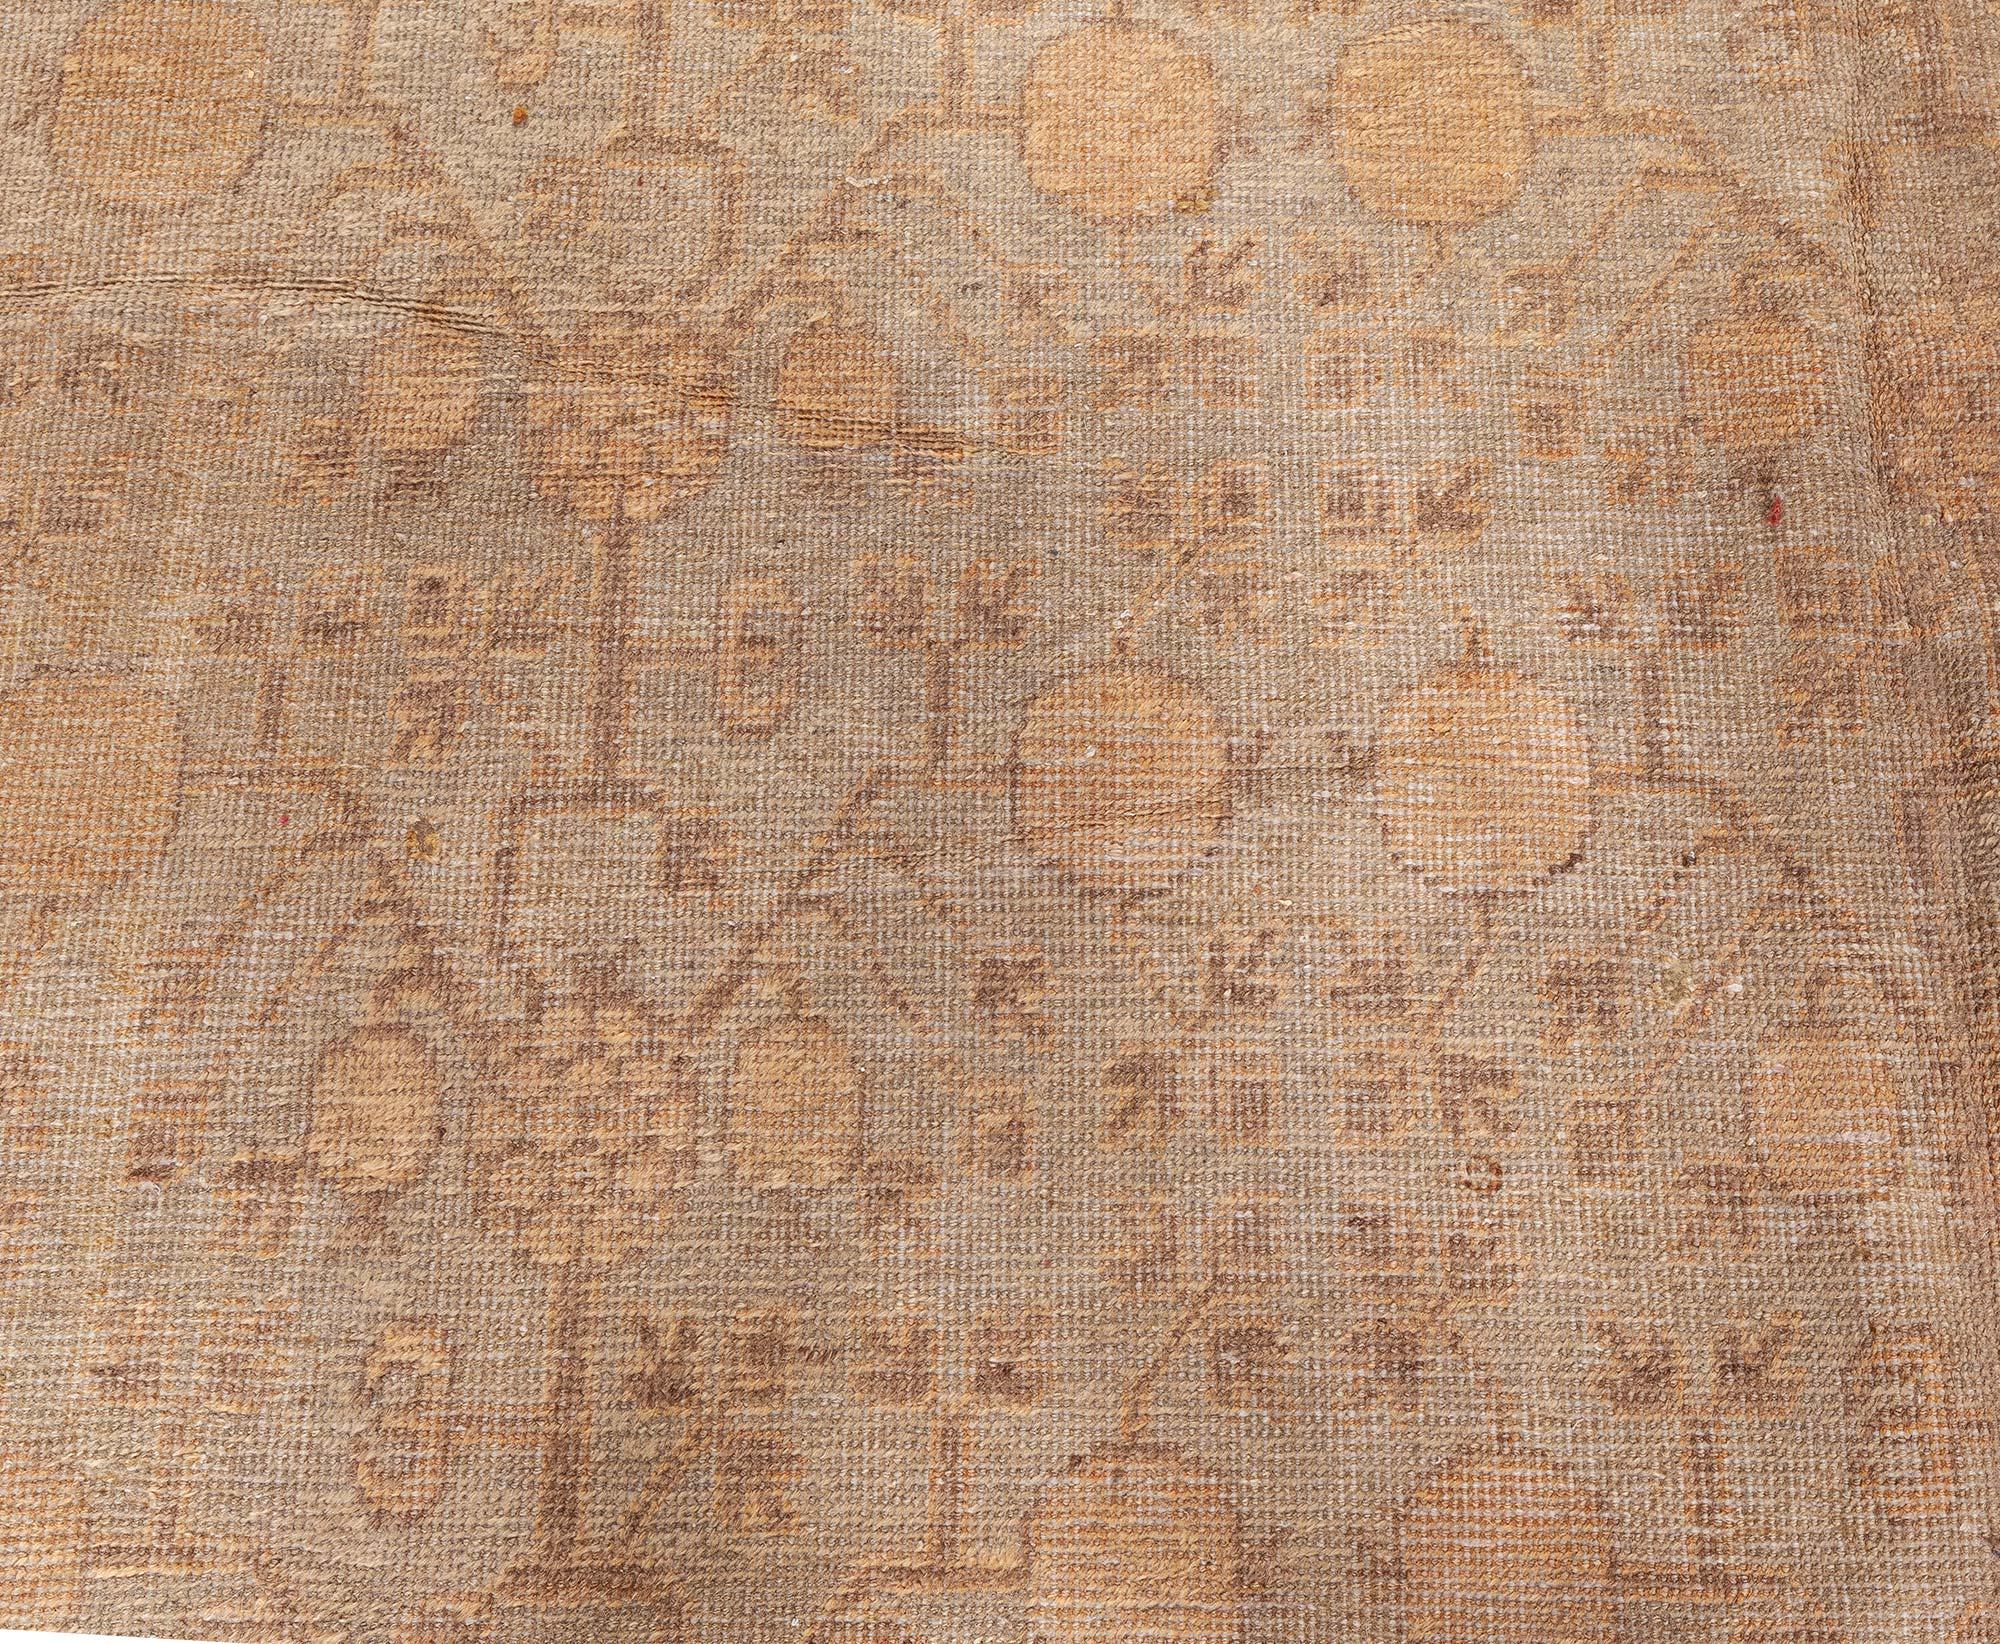 One-of-a-kind Vintage Samarkand handmade wool rug.
Size: 7'8